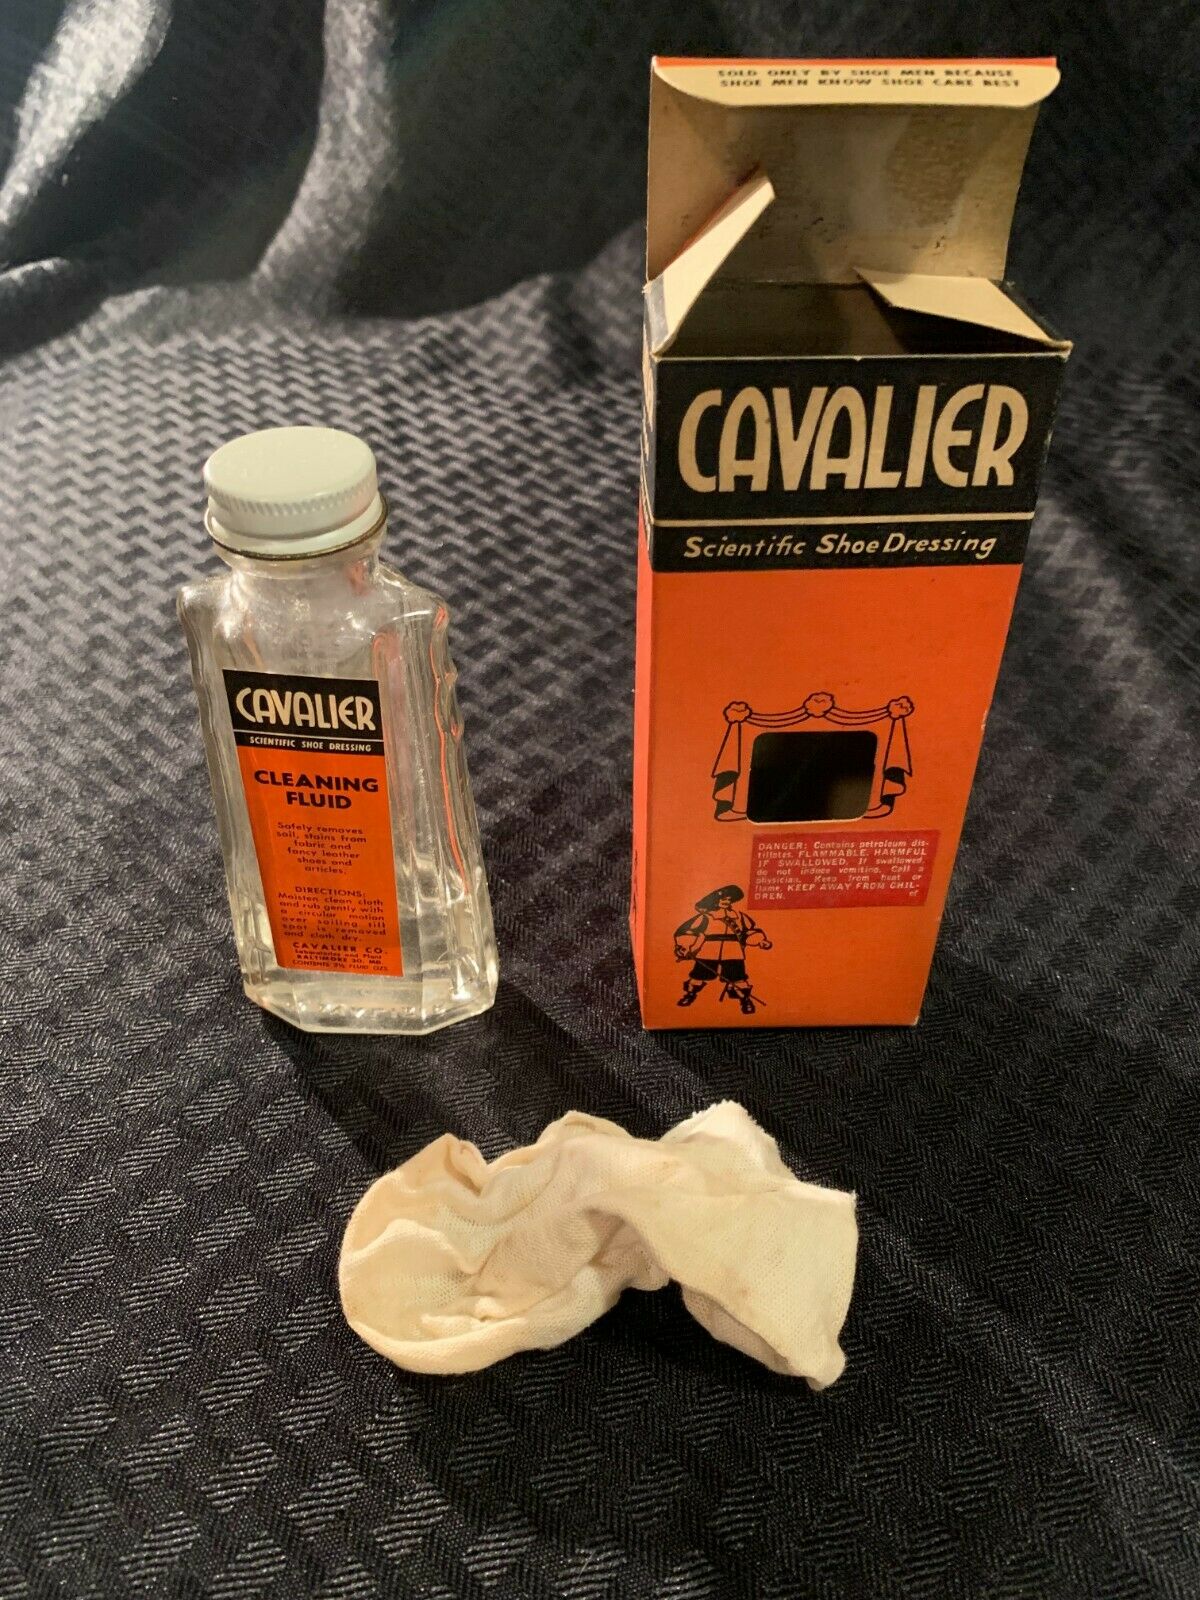 Vintage Cavalier Scientific Shoe Dressing Cleaner Bottle 1/4 Full and Box